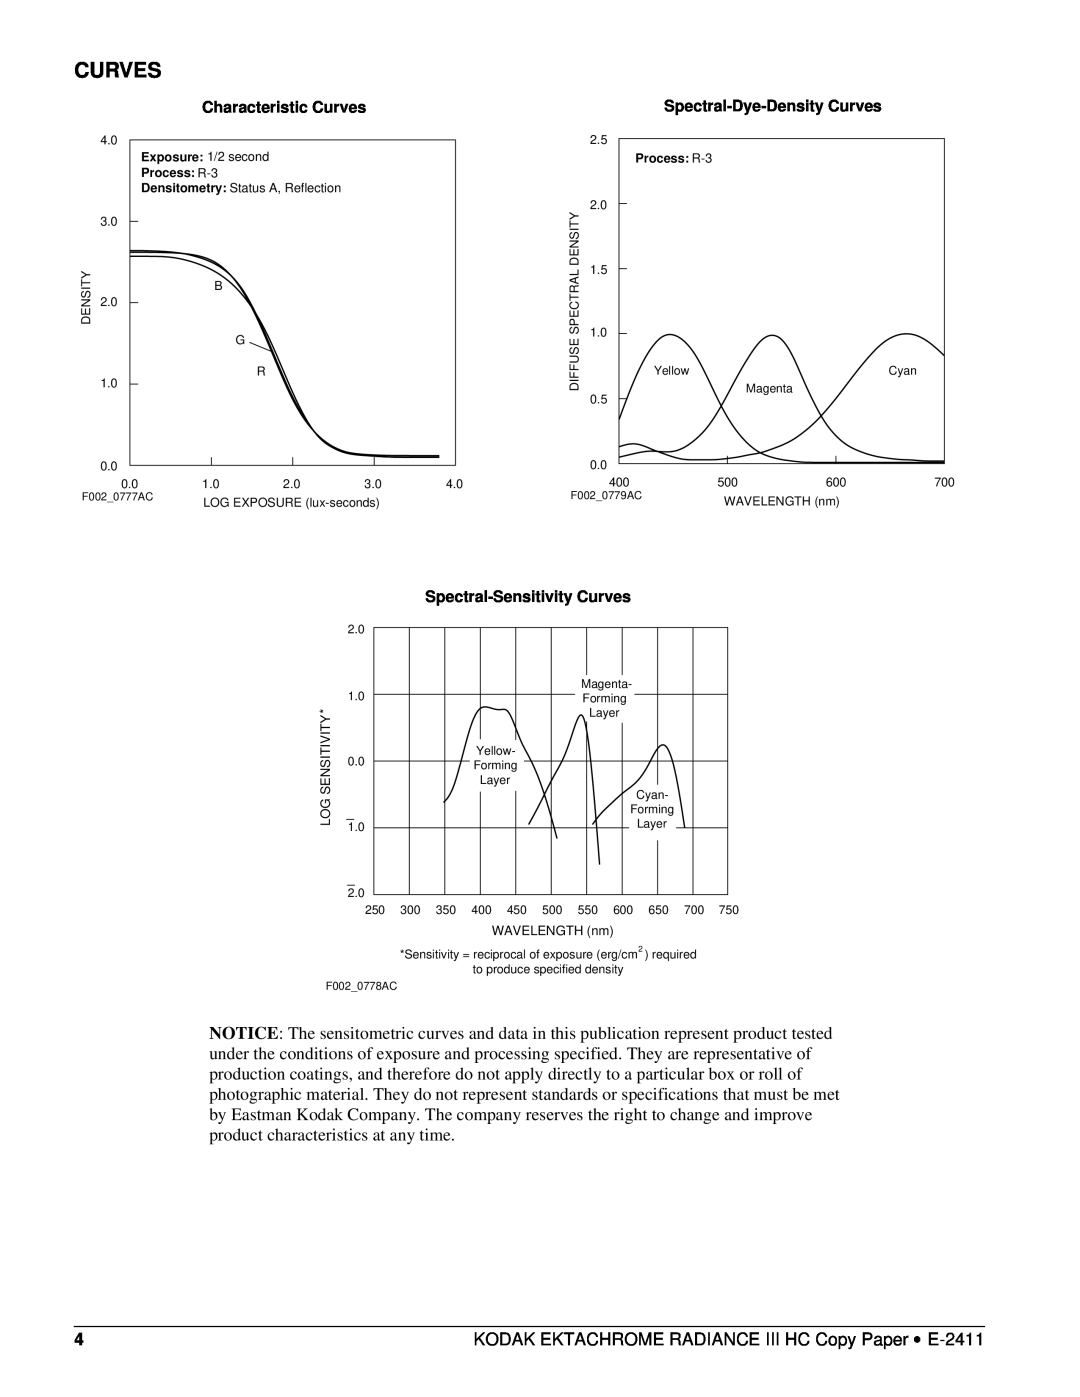 Kodak E-2411 manual Characteristic Curves, Spectral-Dye-DensityCurves, Spectral-SensitivityCurves 